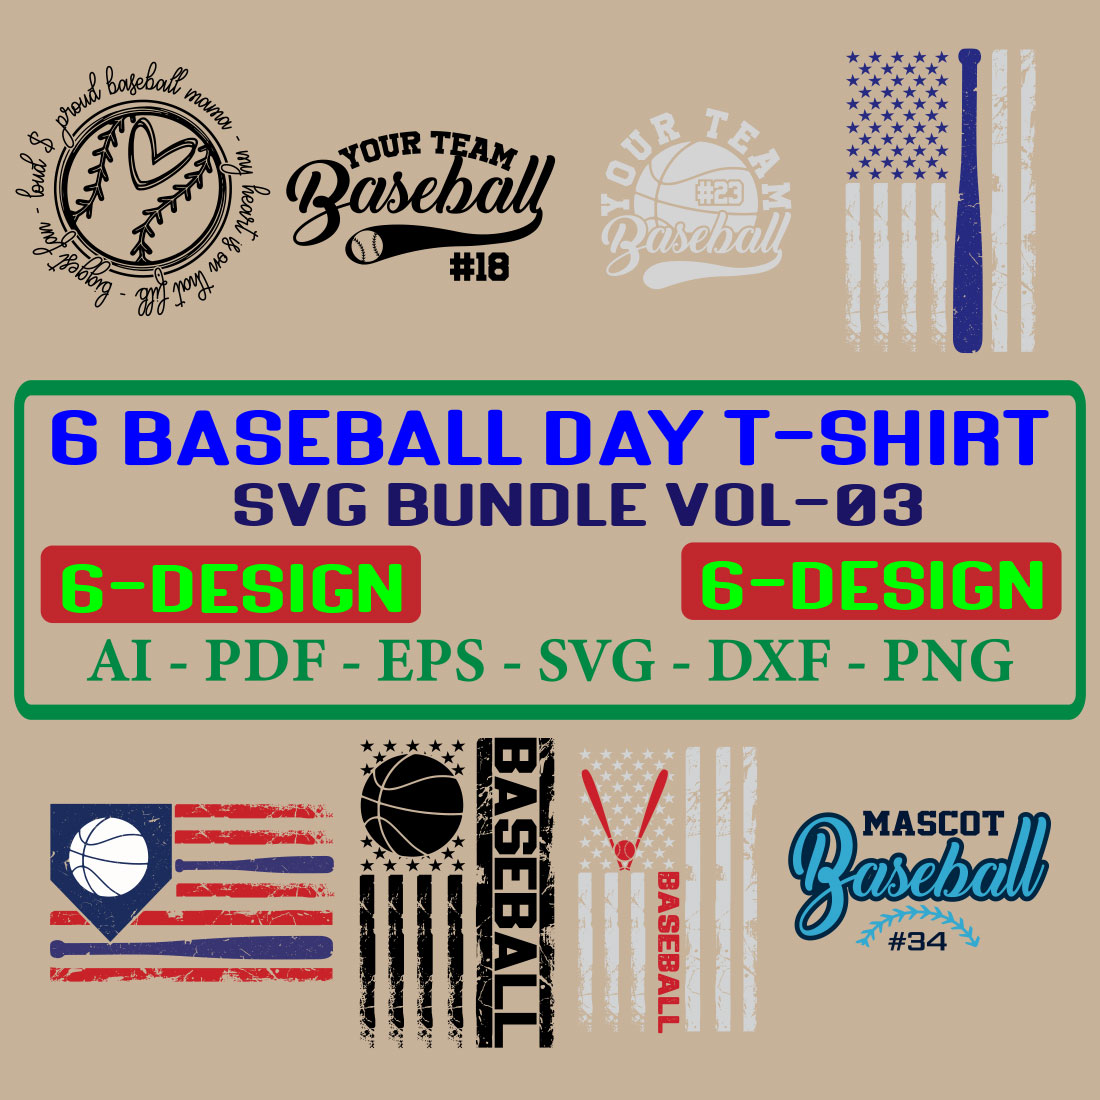 6 Baseball Day T-shirt SVG Bundle Vol-03 cover image.